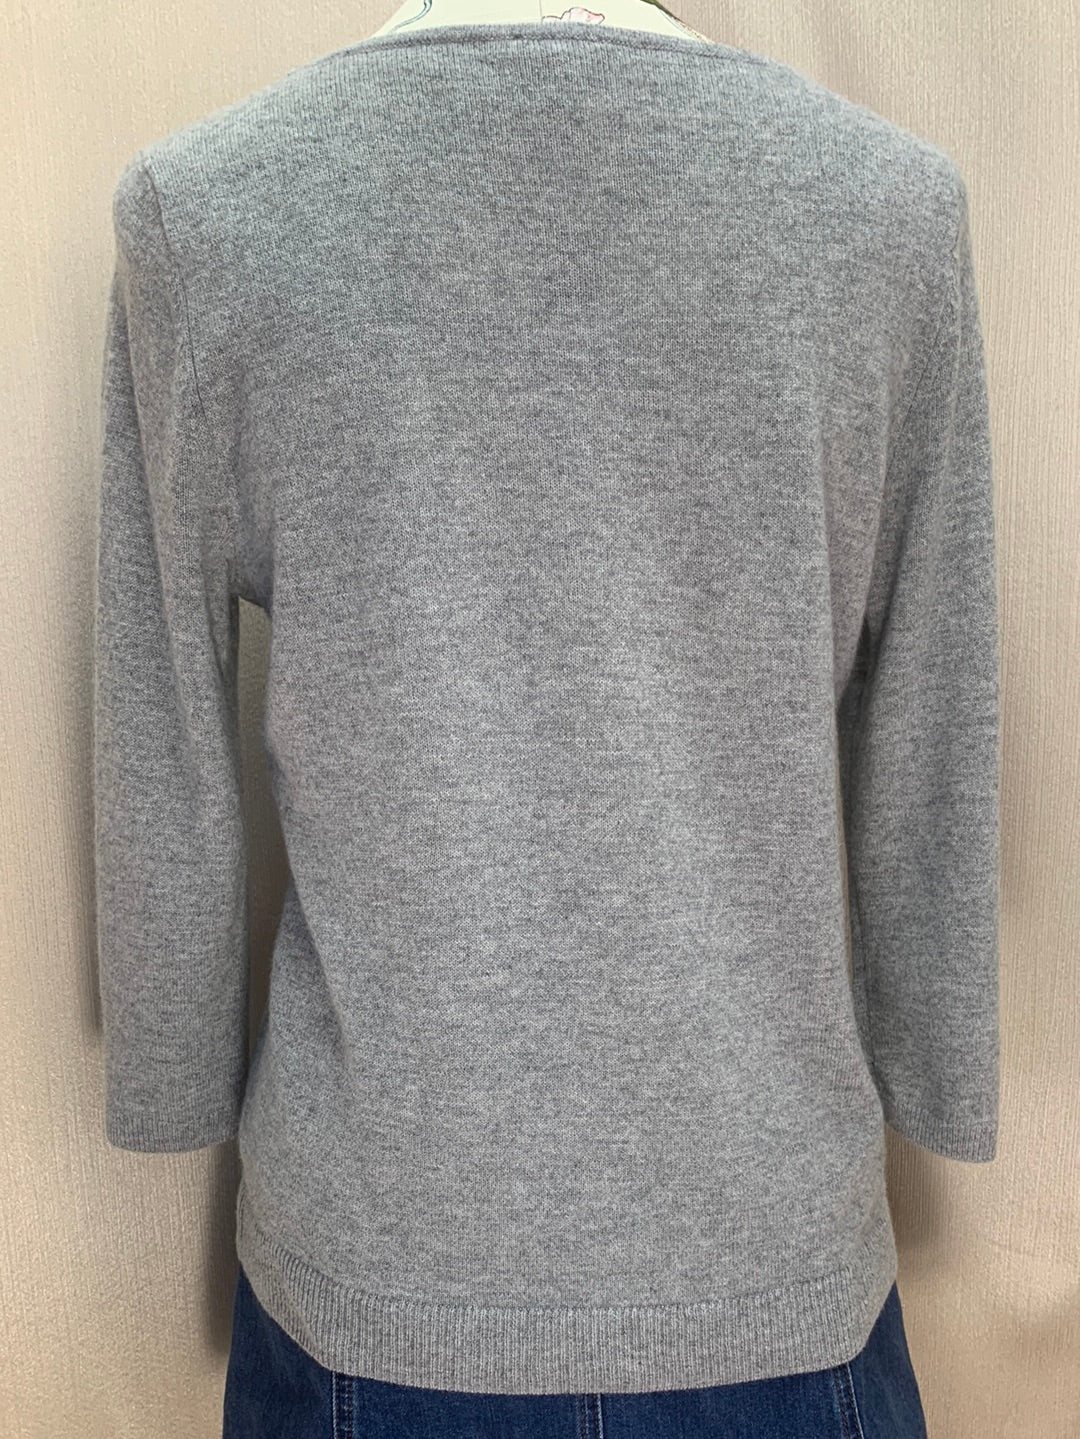 TALBOTS grey Cashmere 3/4 Sleeve Sweater - M